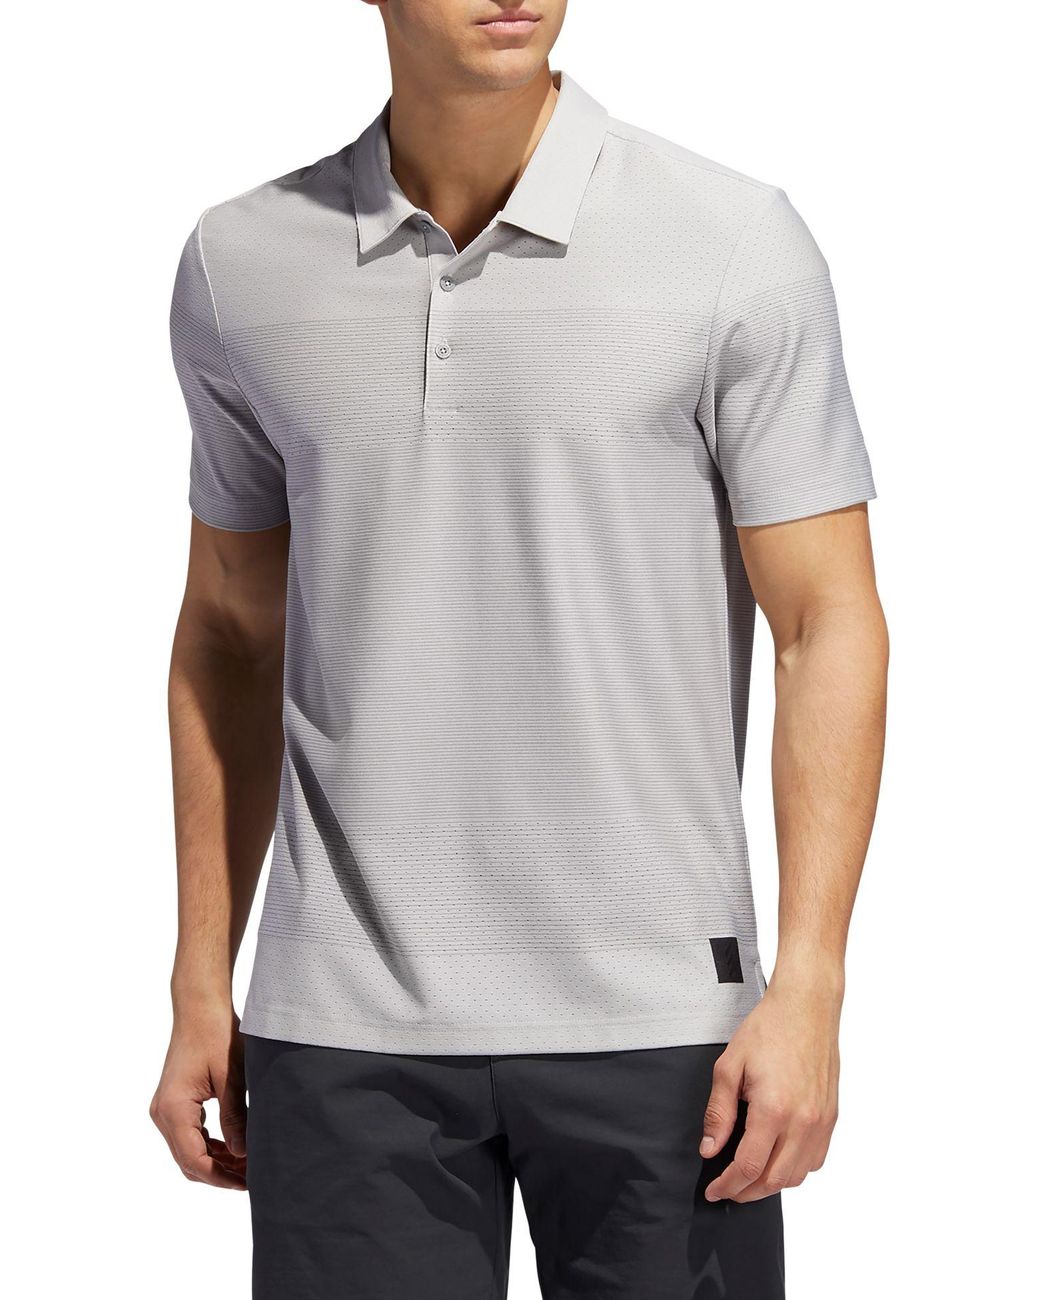 adidas Adicross Warpknit Golf Polo in Grey Two (Gray) for Men - Lyst